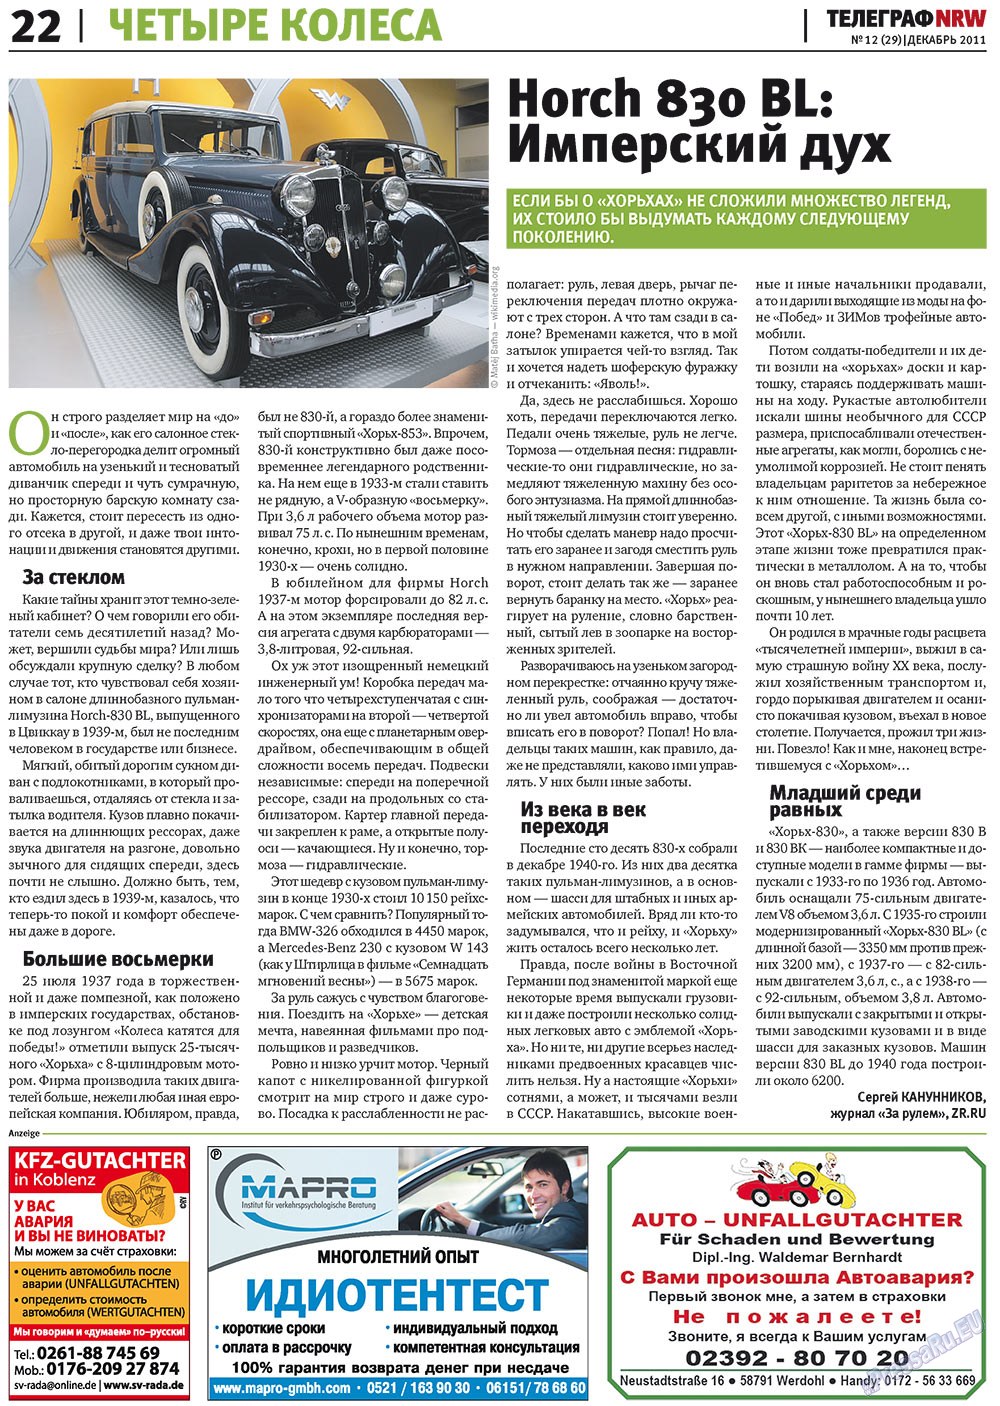 Телеграф NRW, газета. 2011 №12 стр.22